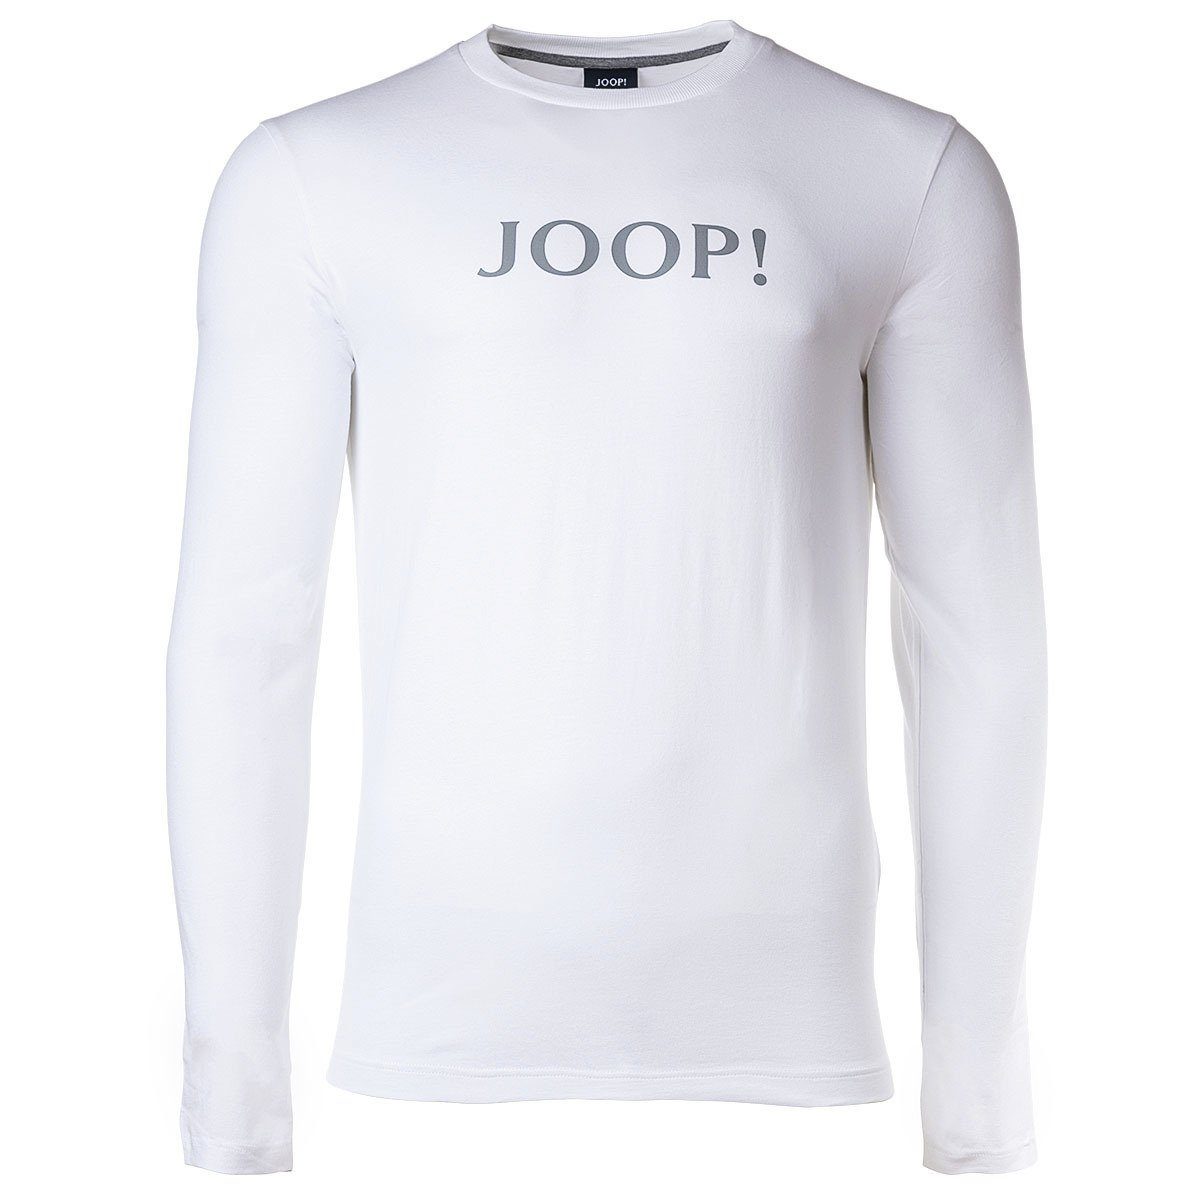 Joop! T-Shirt Weiß Herren Langarm-Shirt Loungewear, Rundhals 